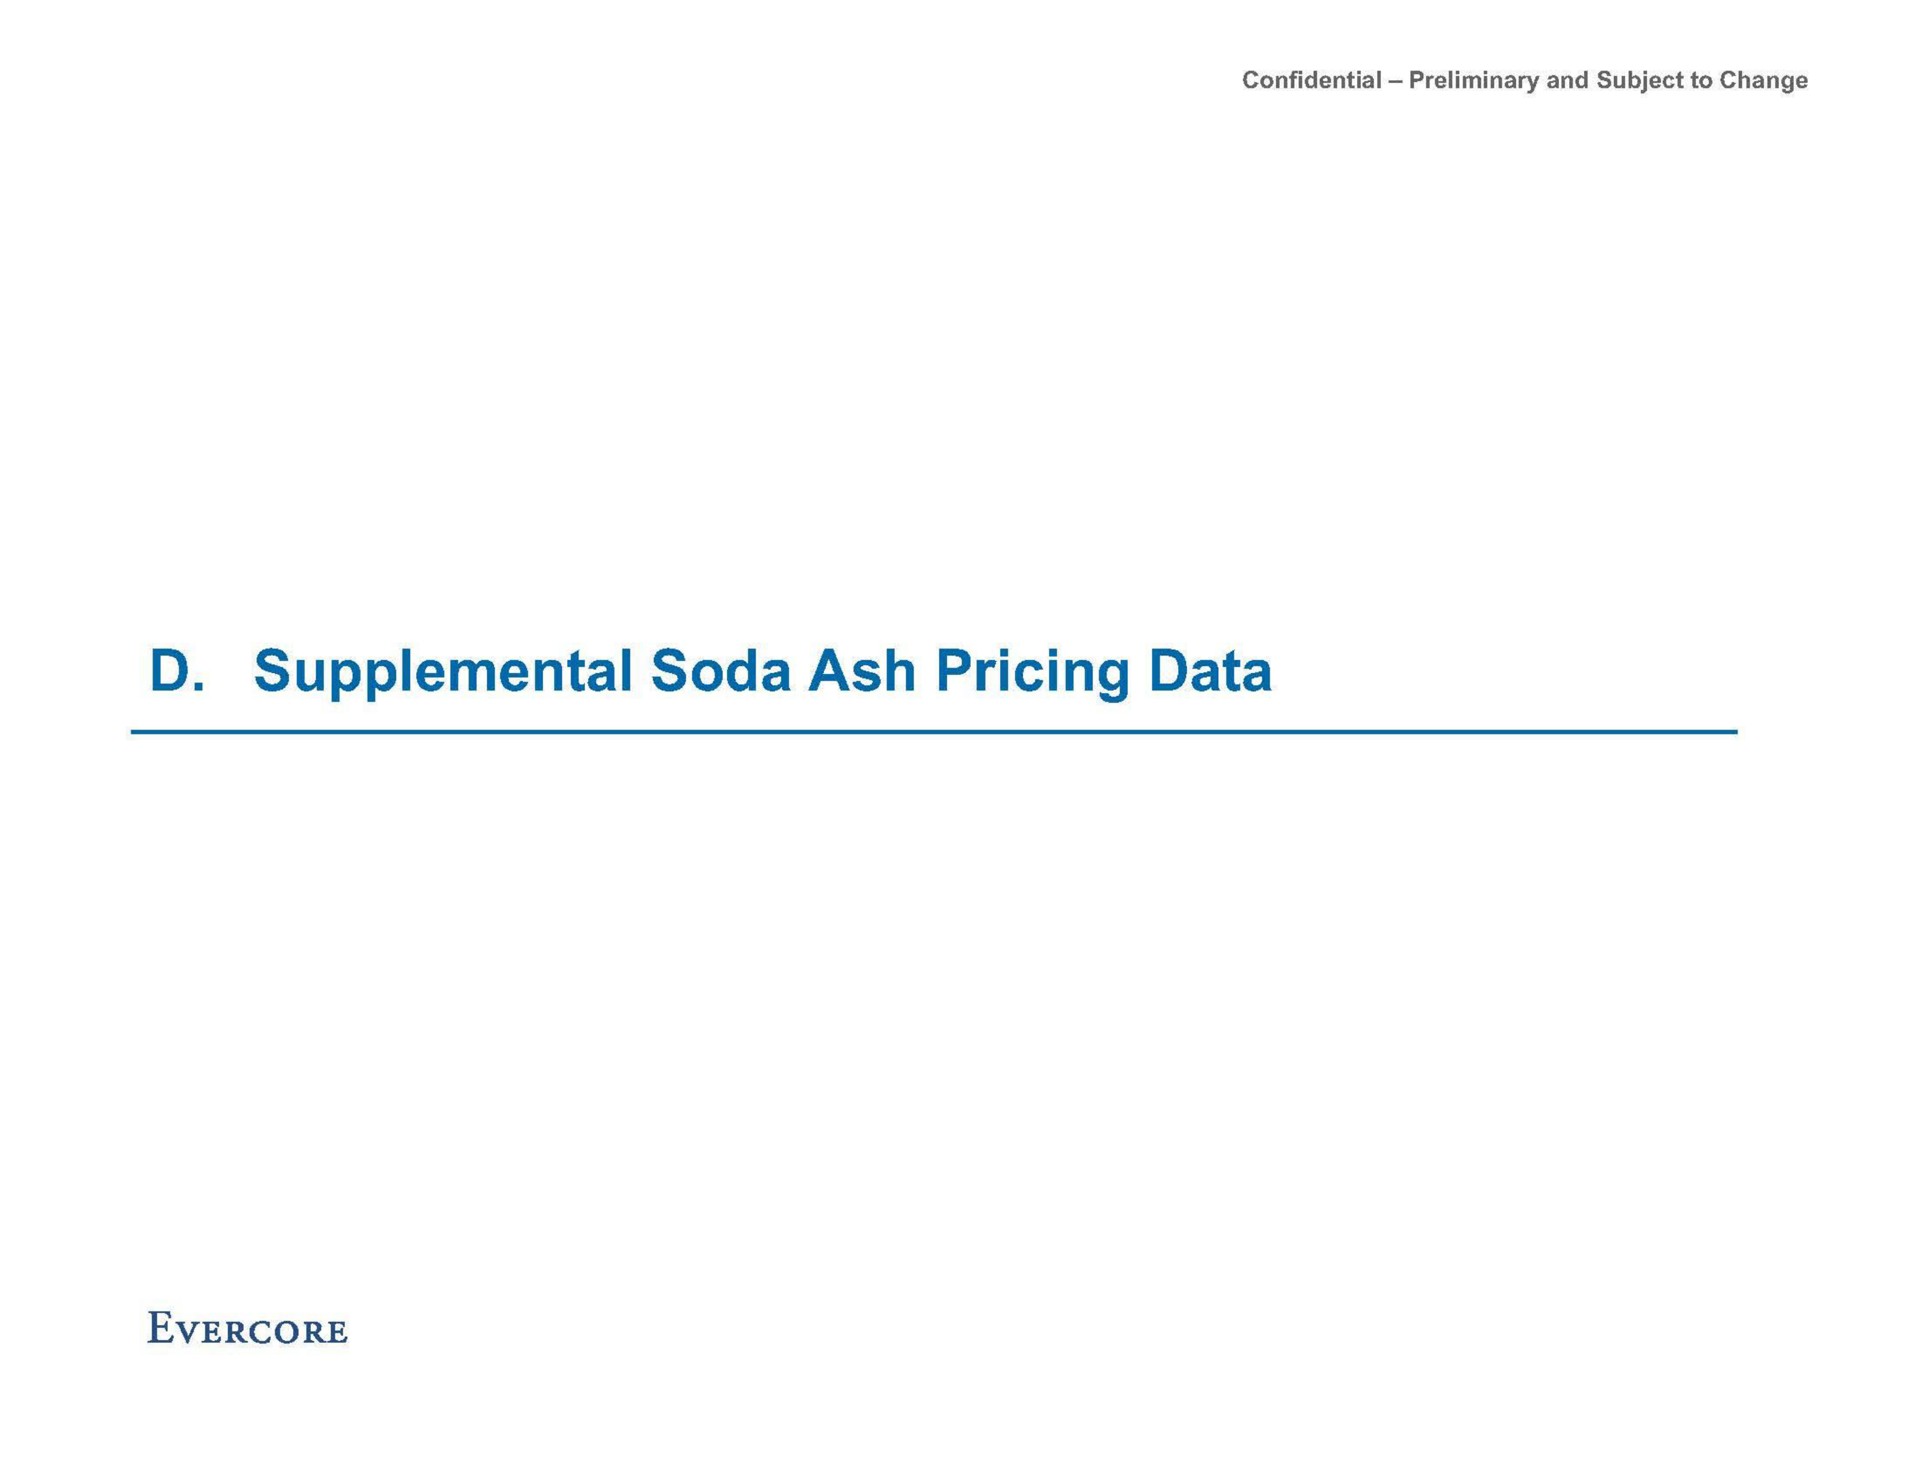 supplemental soda ash pricing data | Evercore